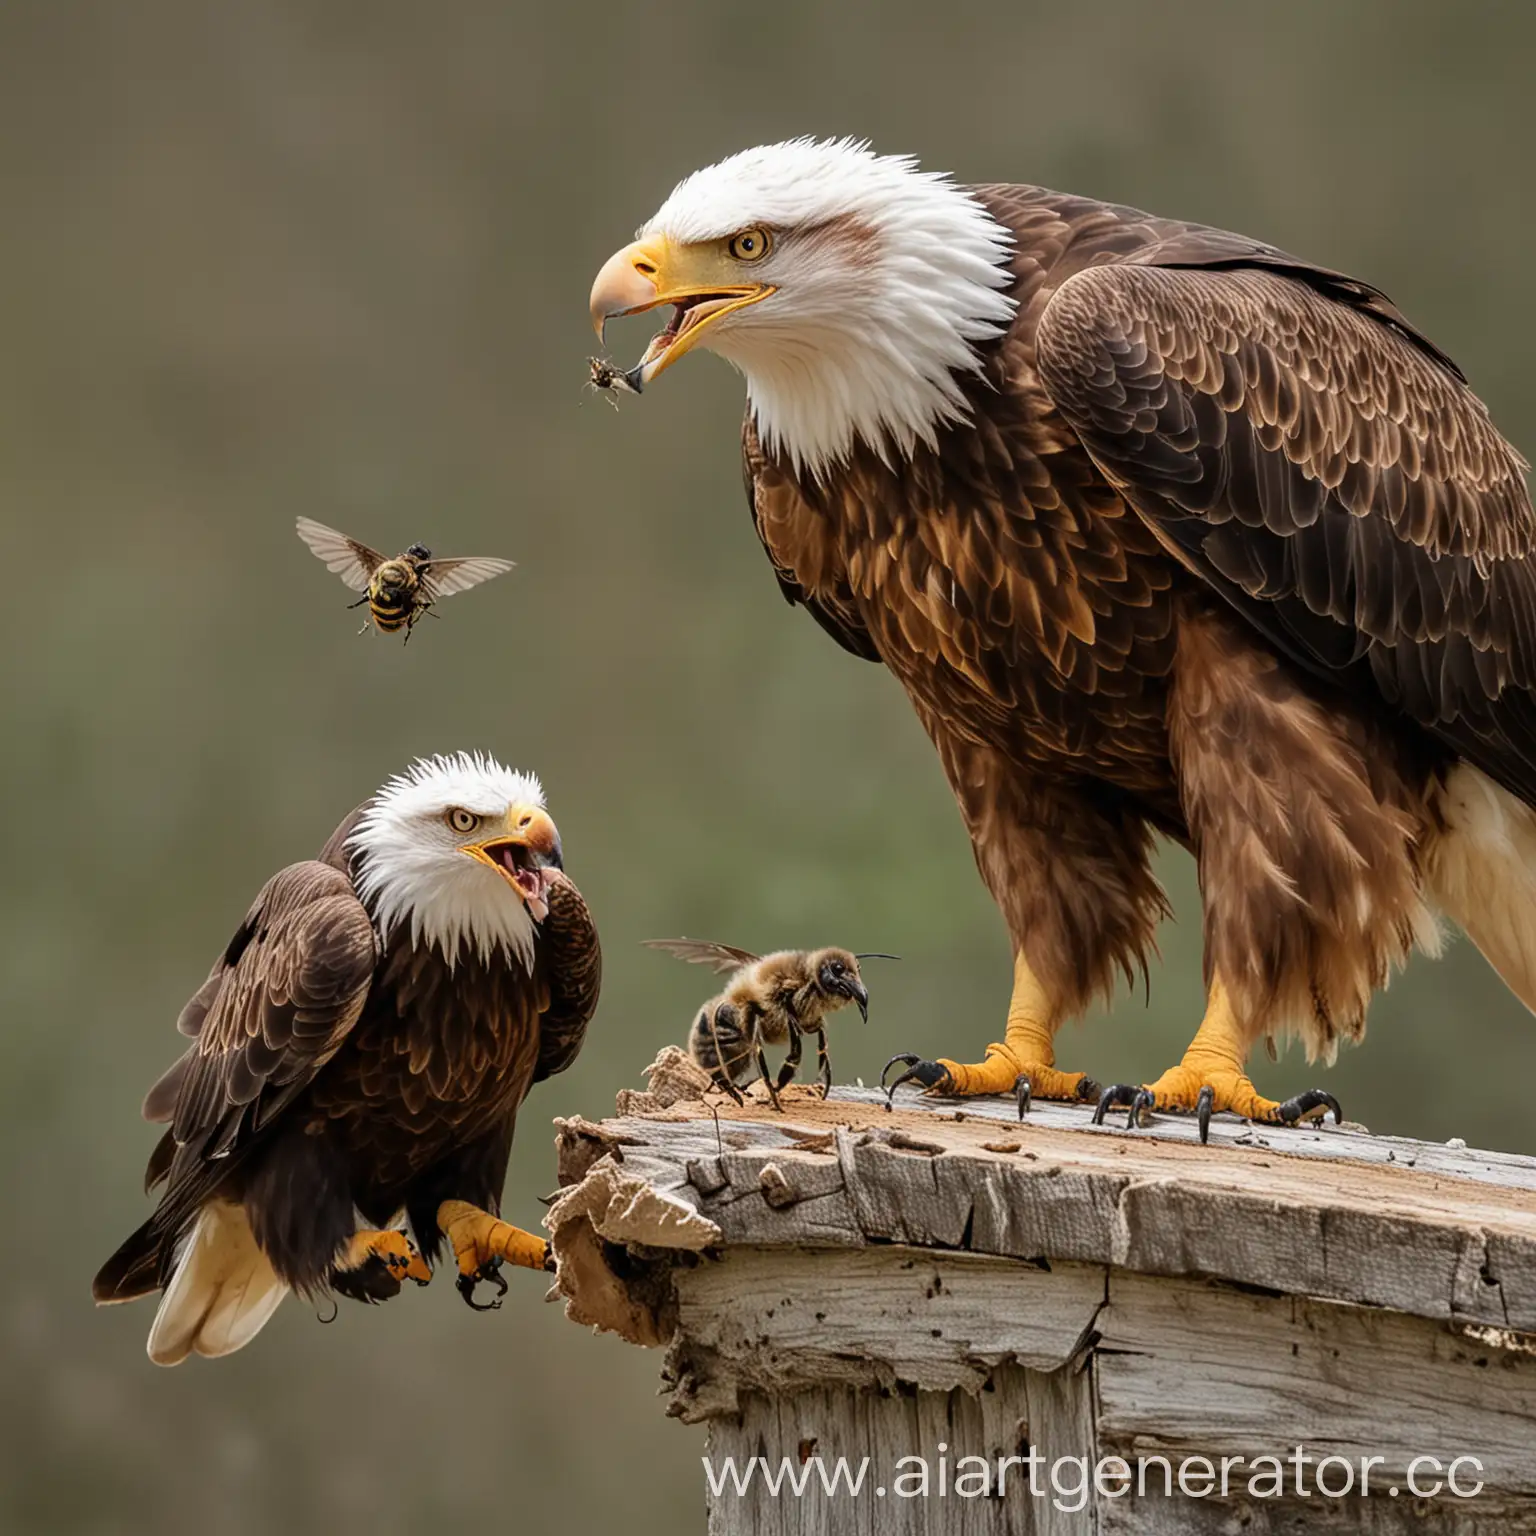 Confrontation-Aggressive-Bee-vs-Eagle-in-MidAir-Battle